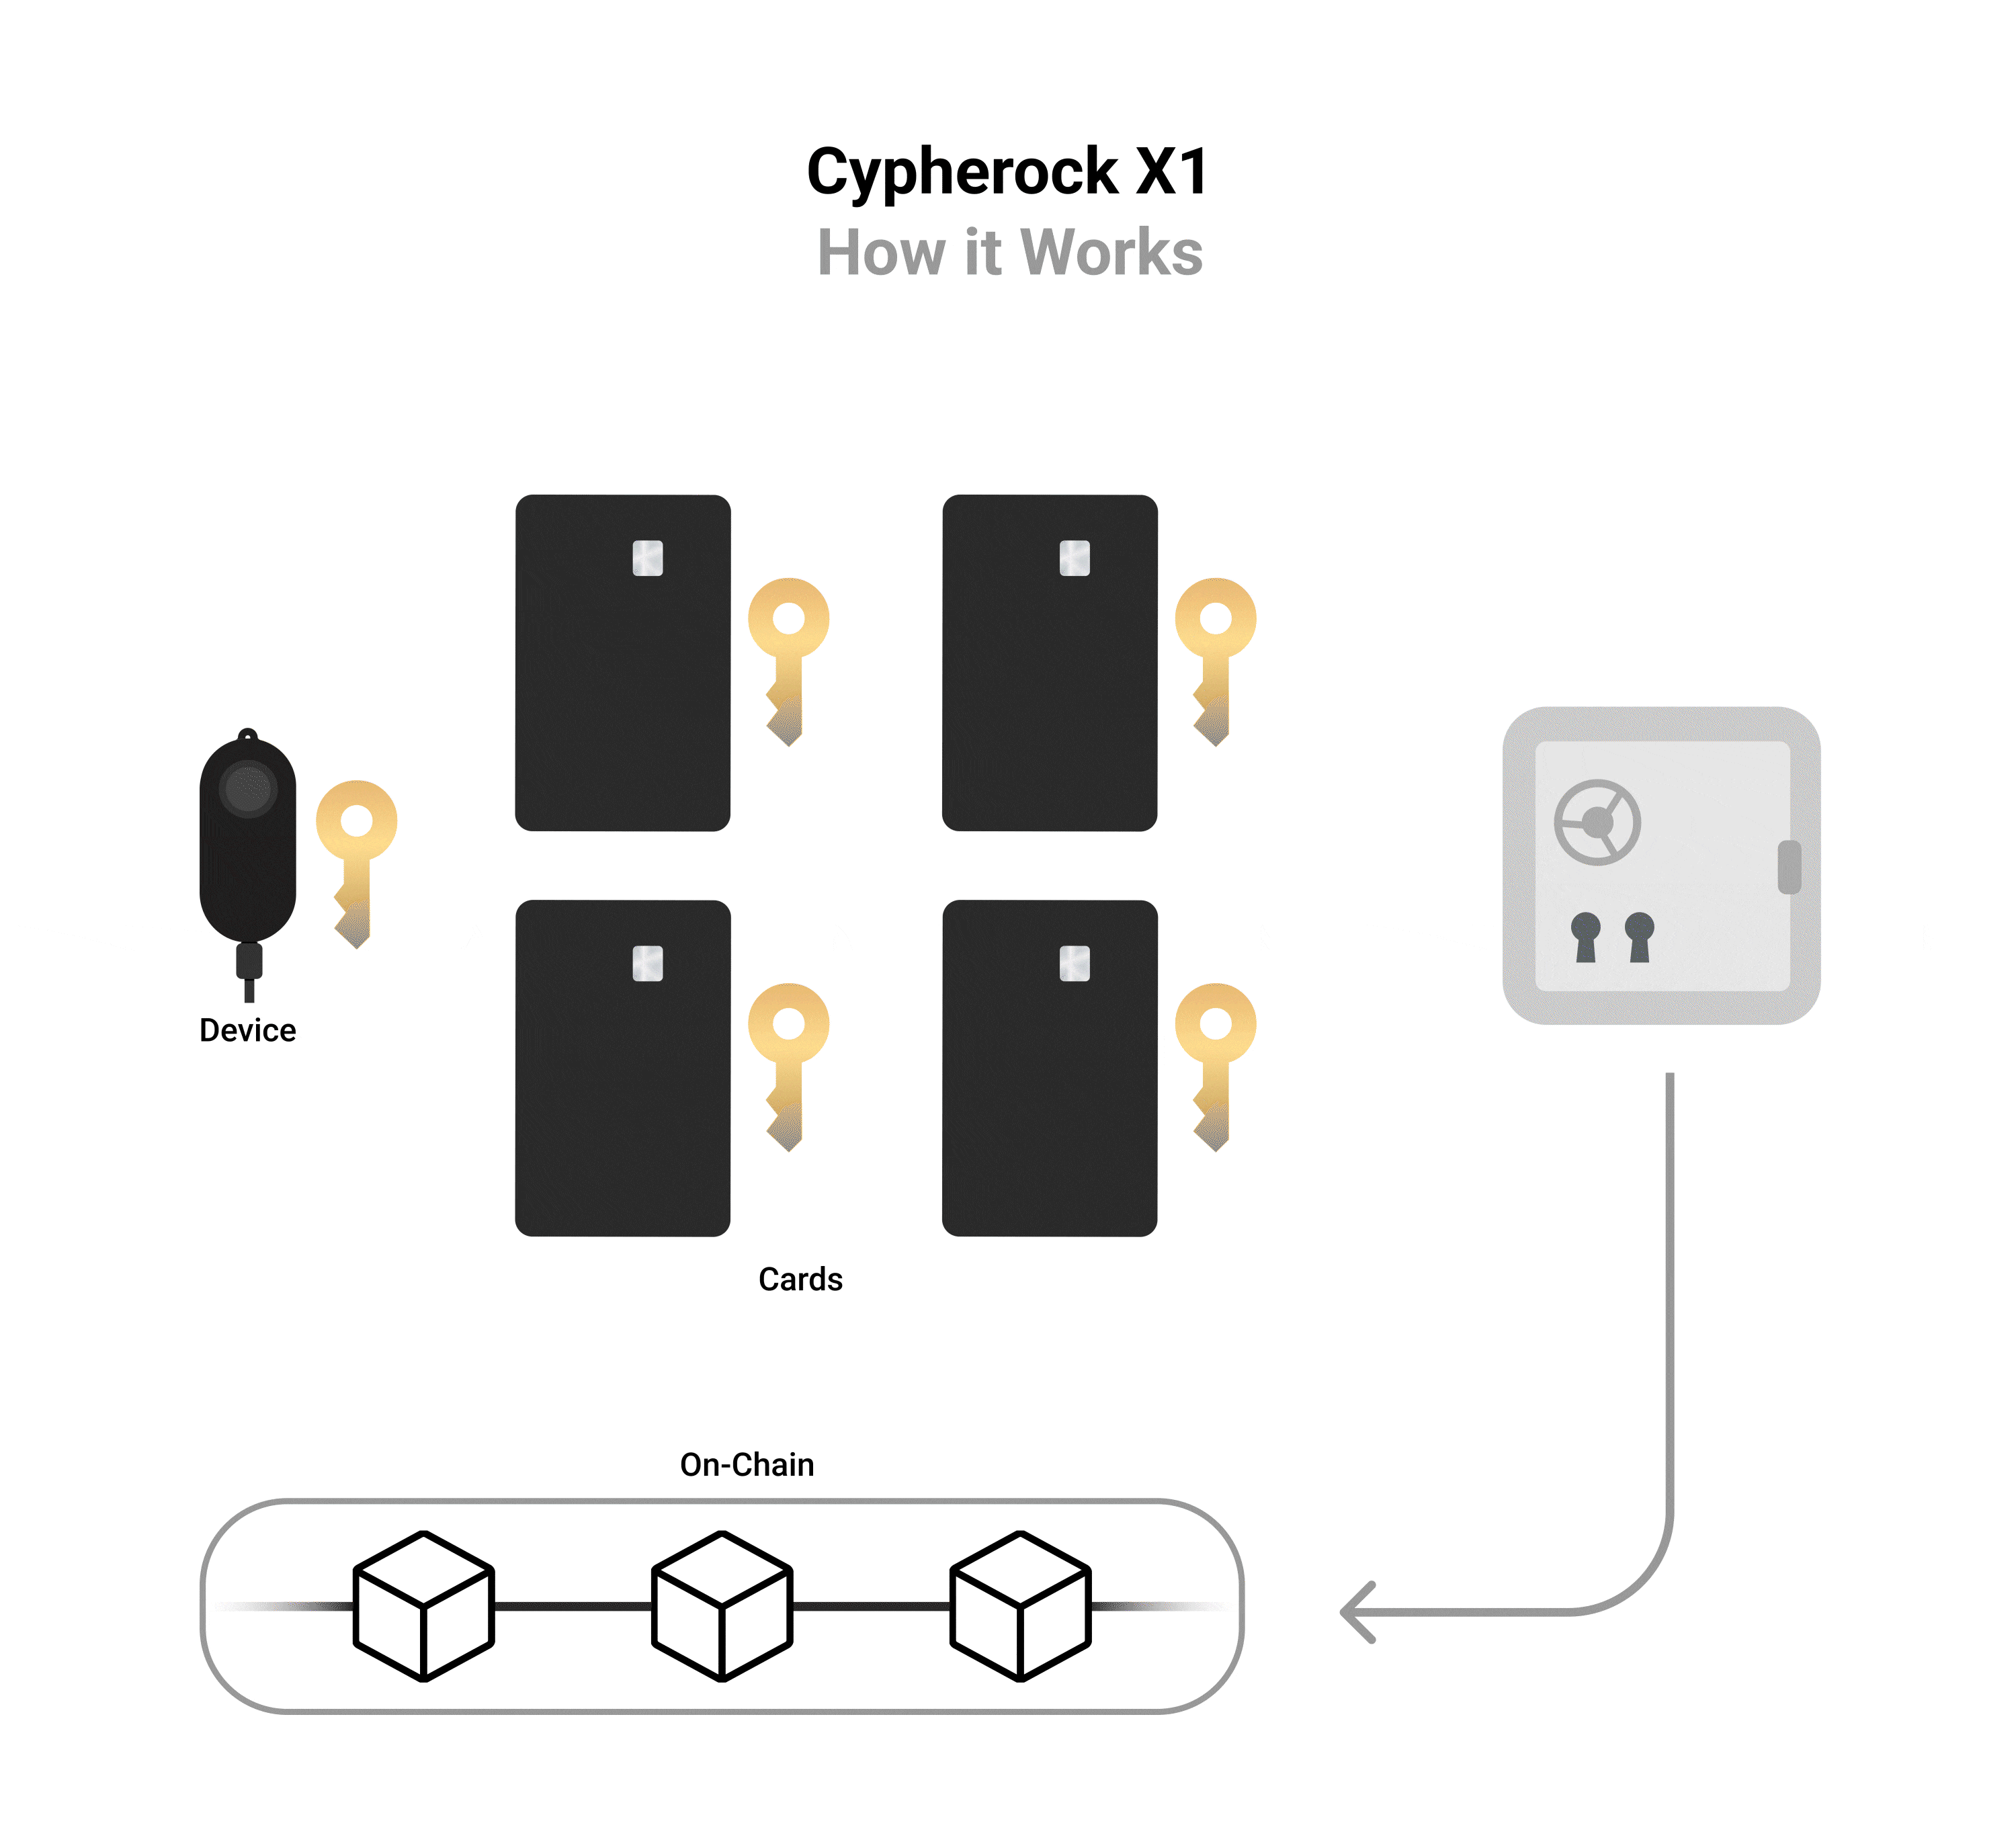 How Cypherock X1 Works